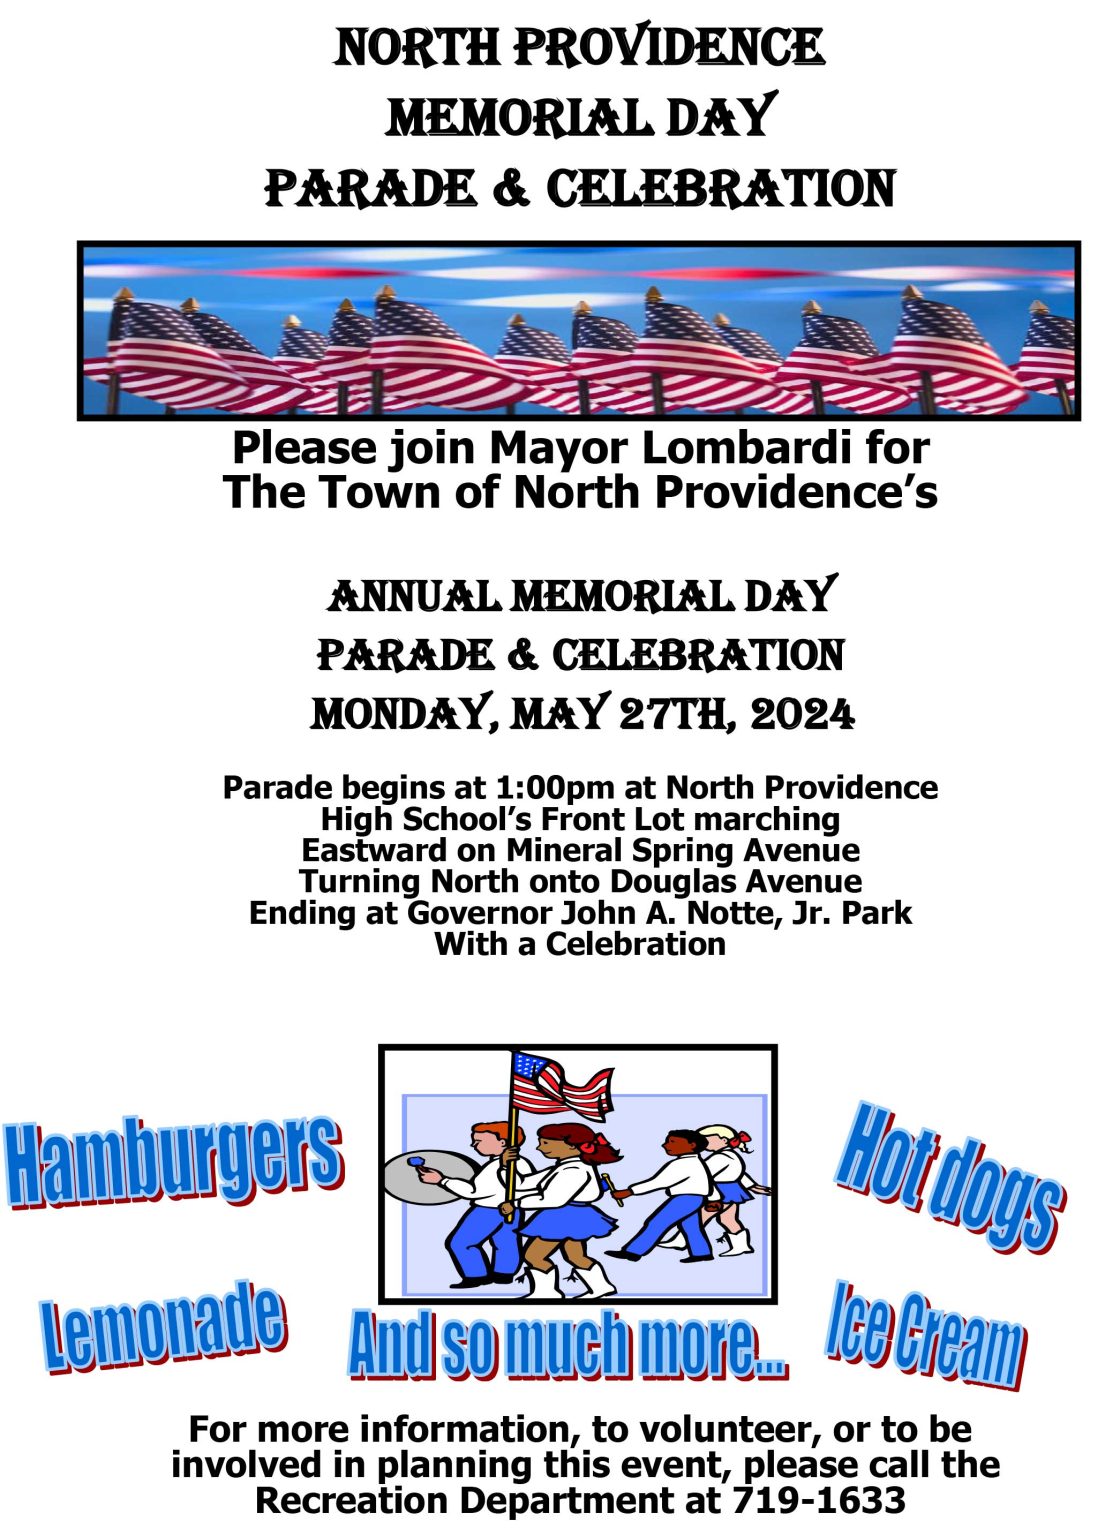 North Providence Memorial Day Parade and Celebration Monday, May 27th 2024 at 1:00pm.